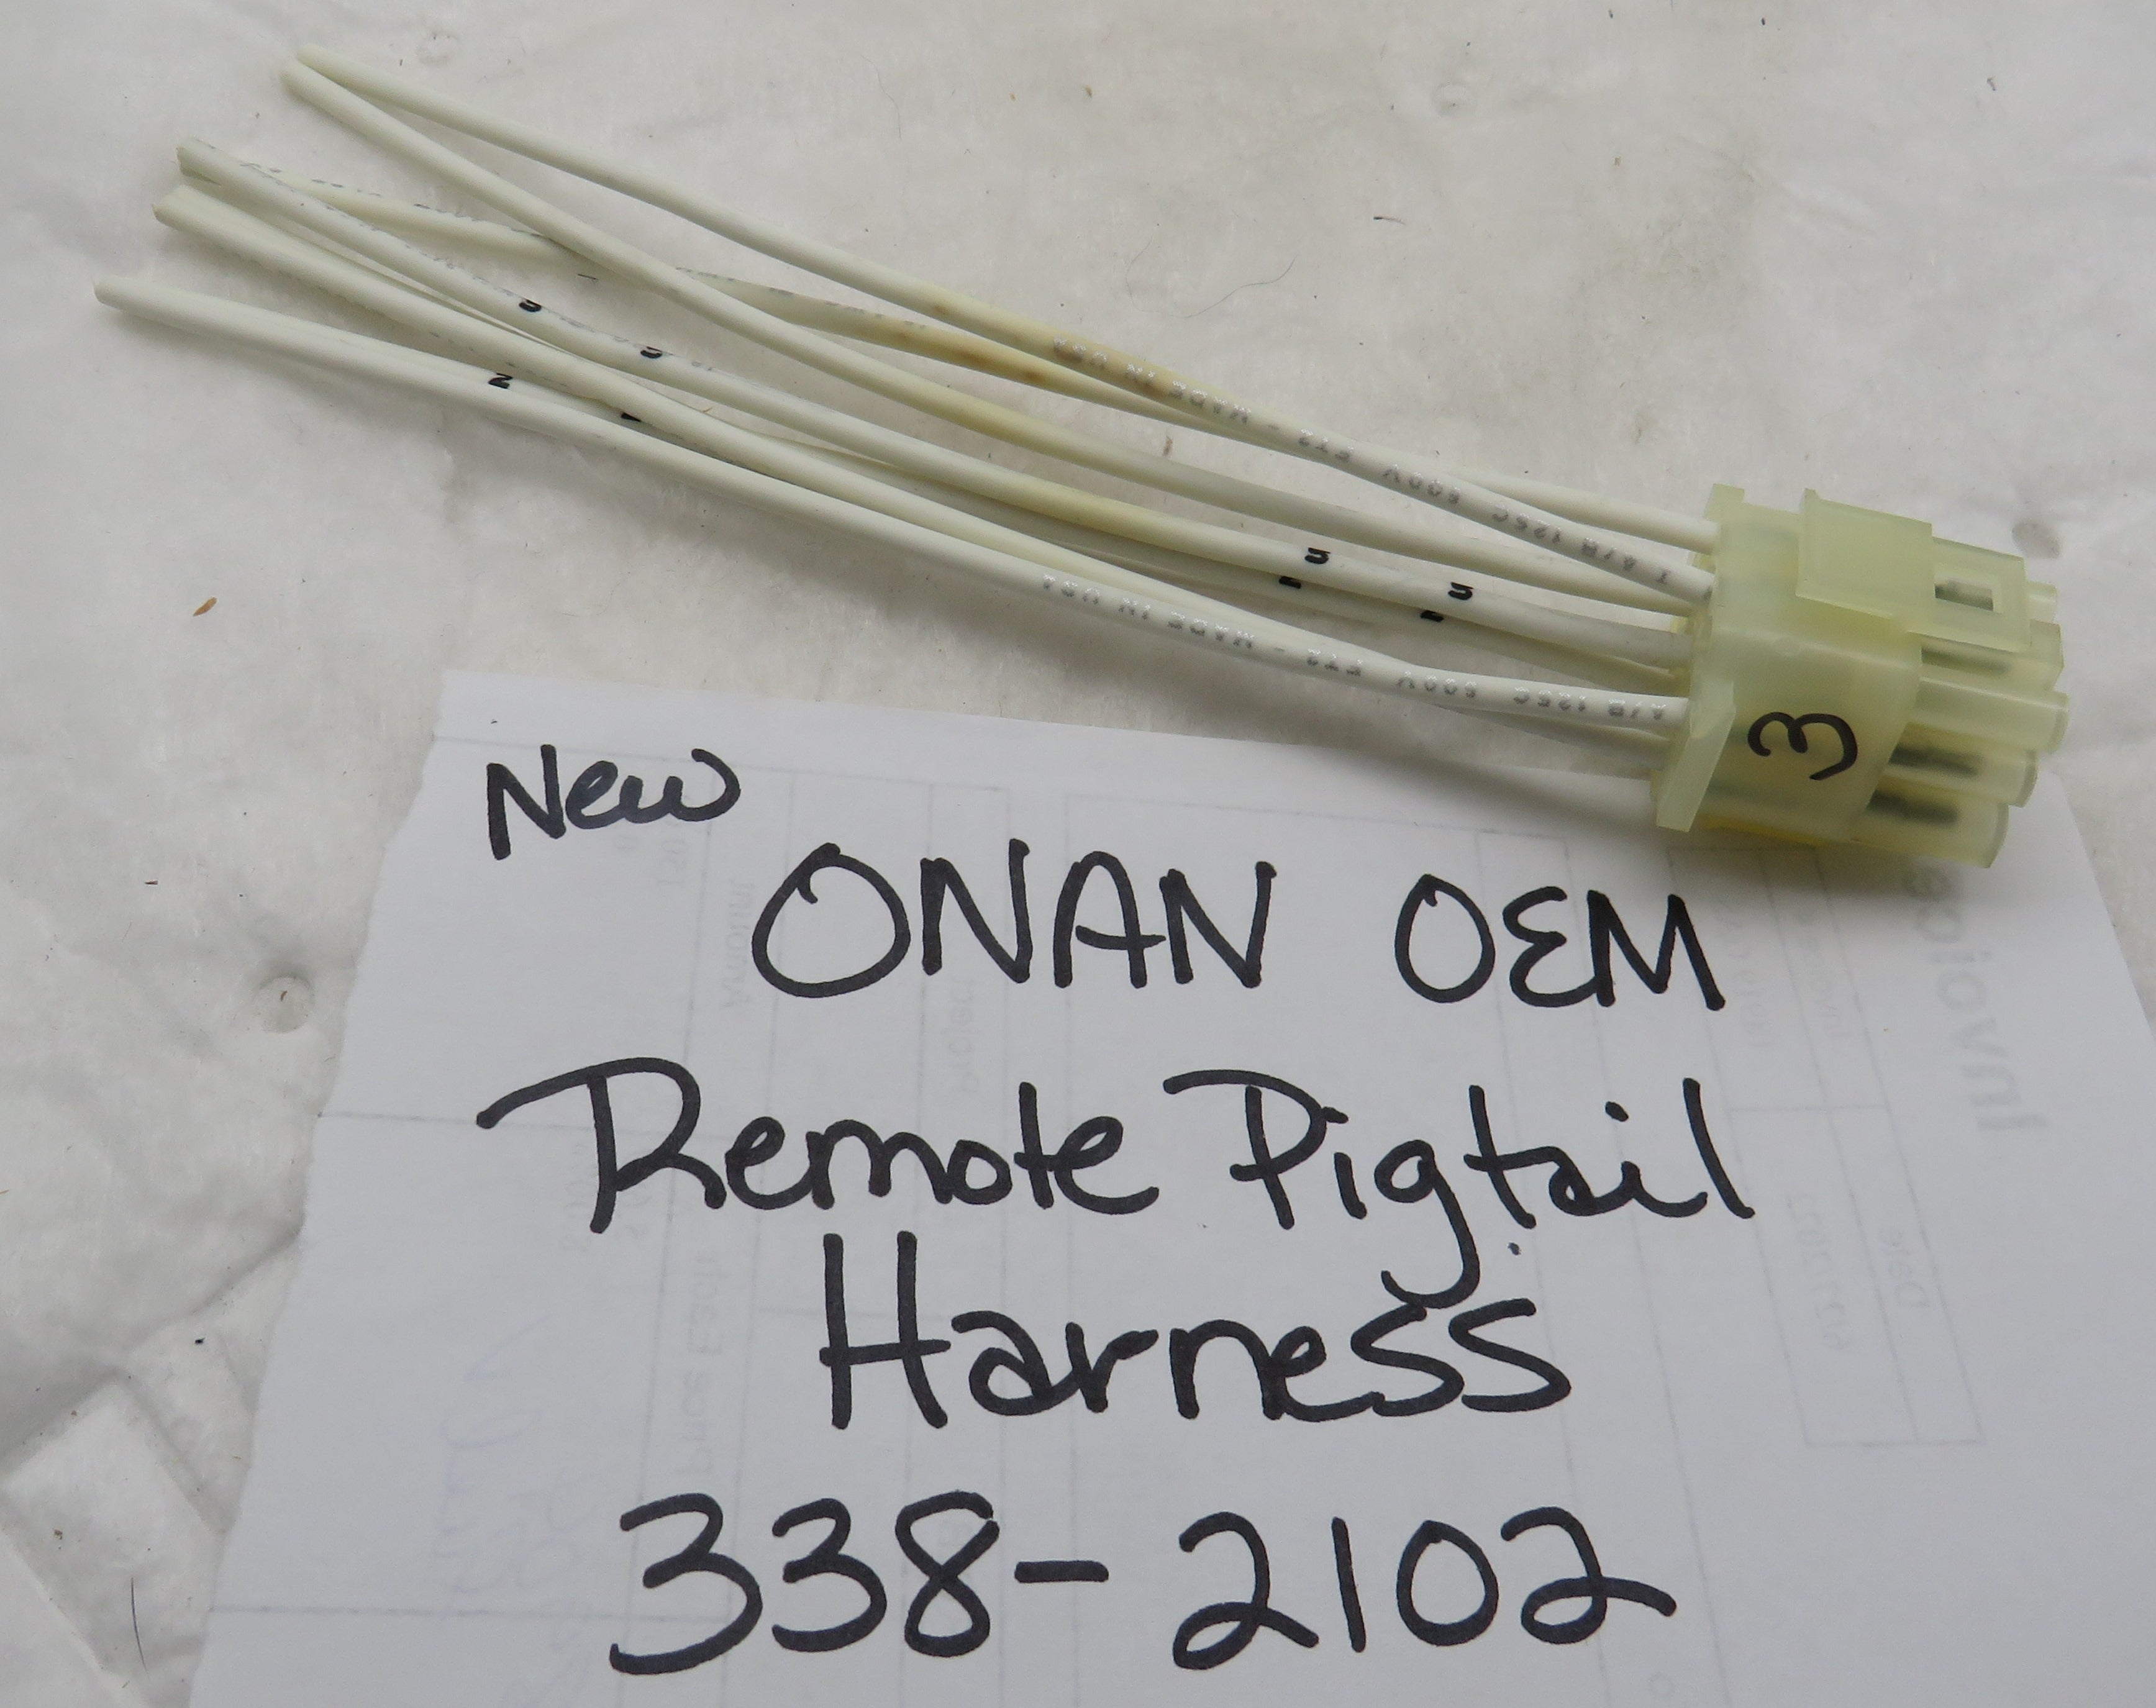 Onan 338-2102 OEM Remote Pigtail Harness 